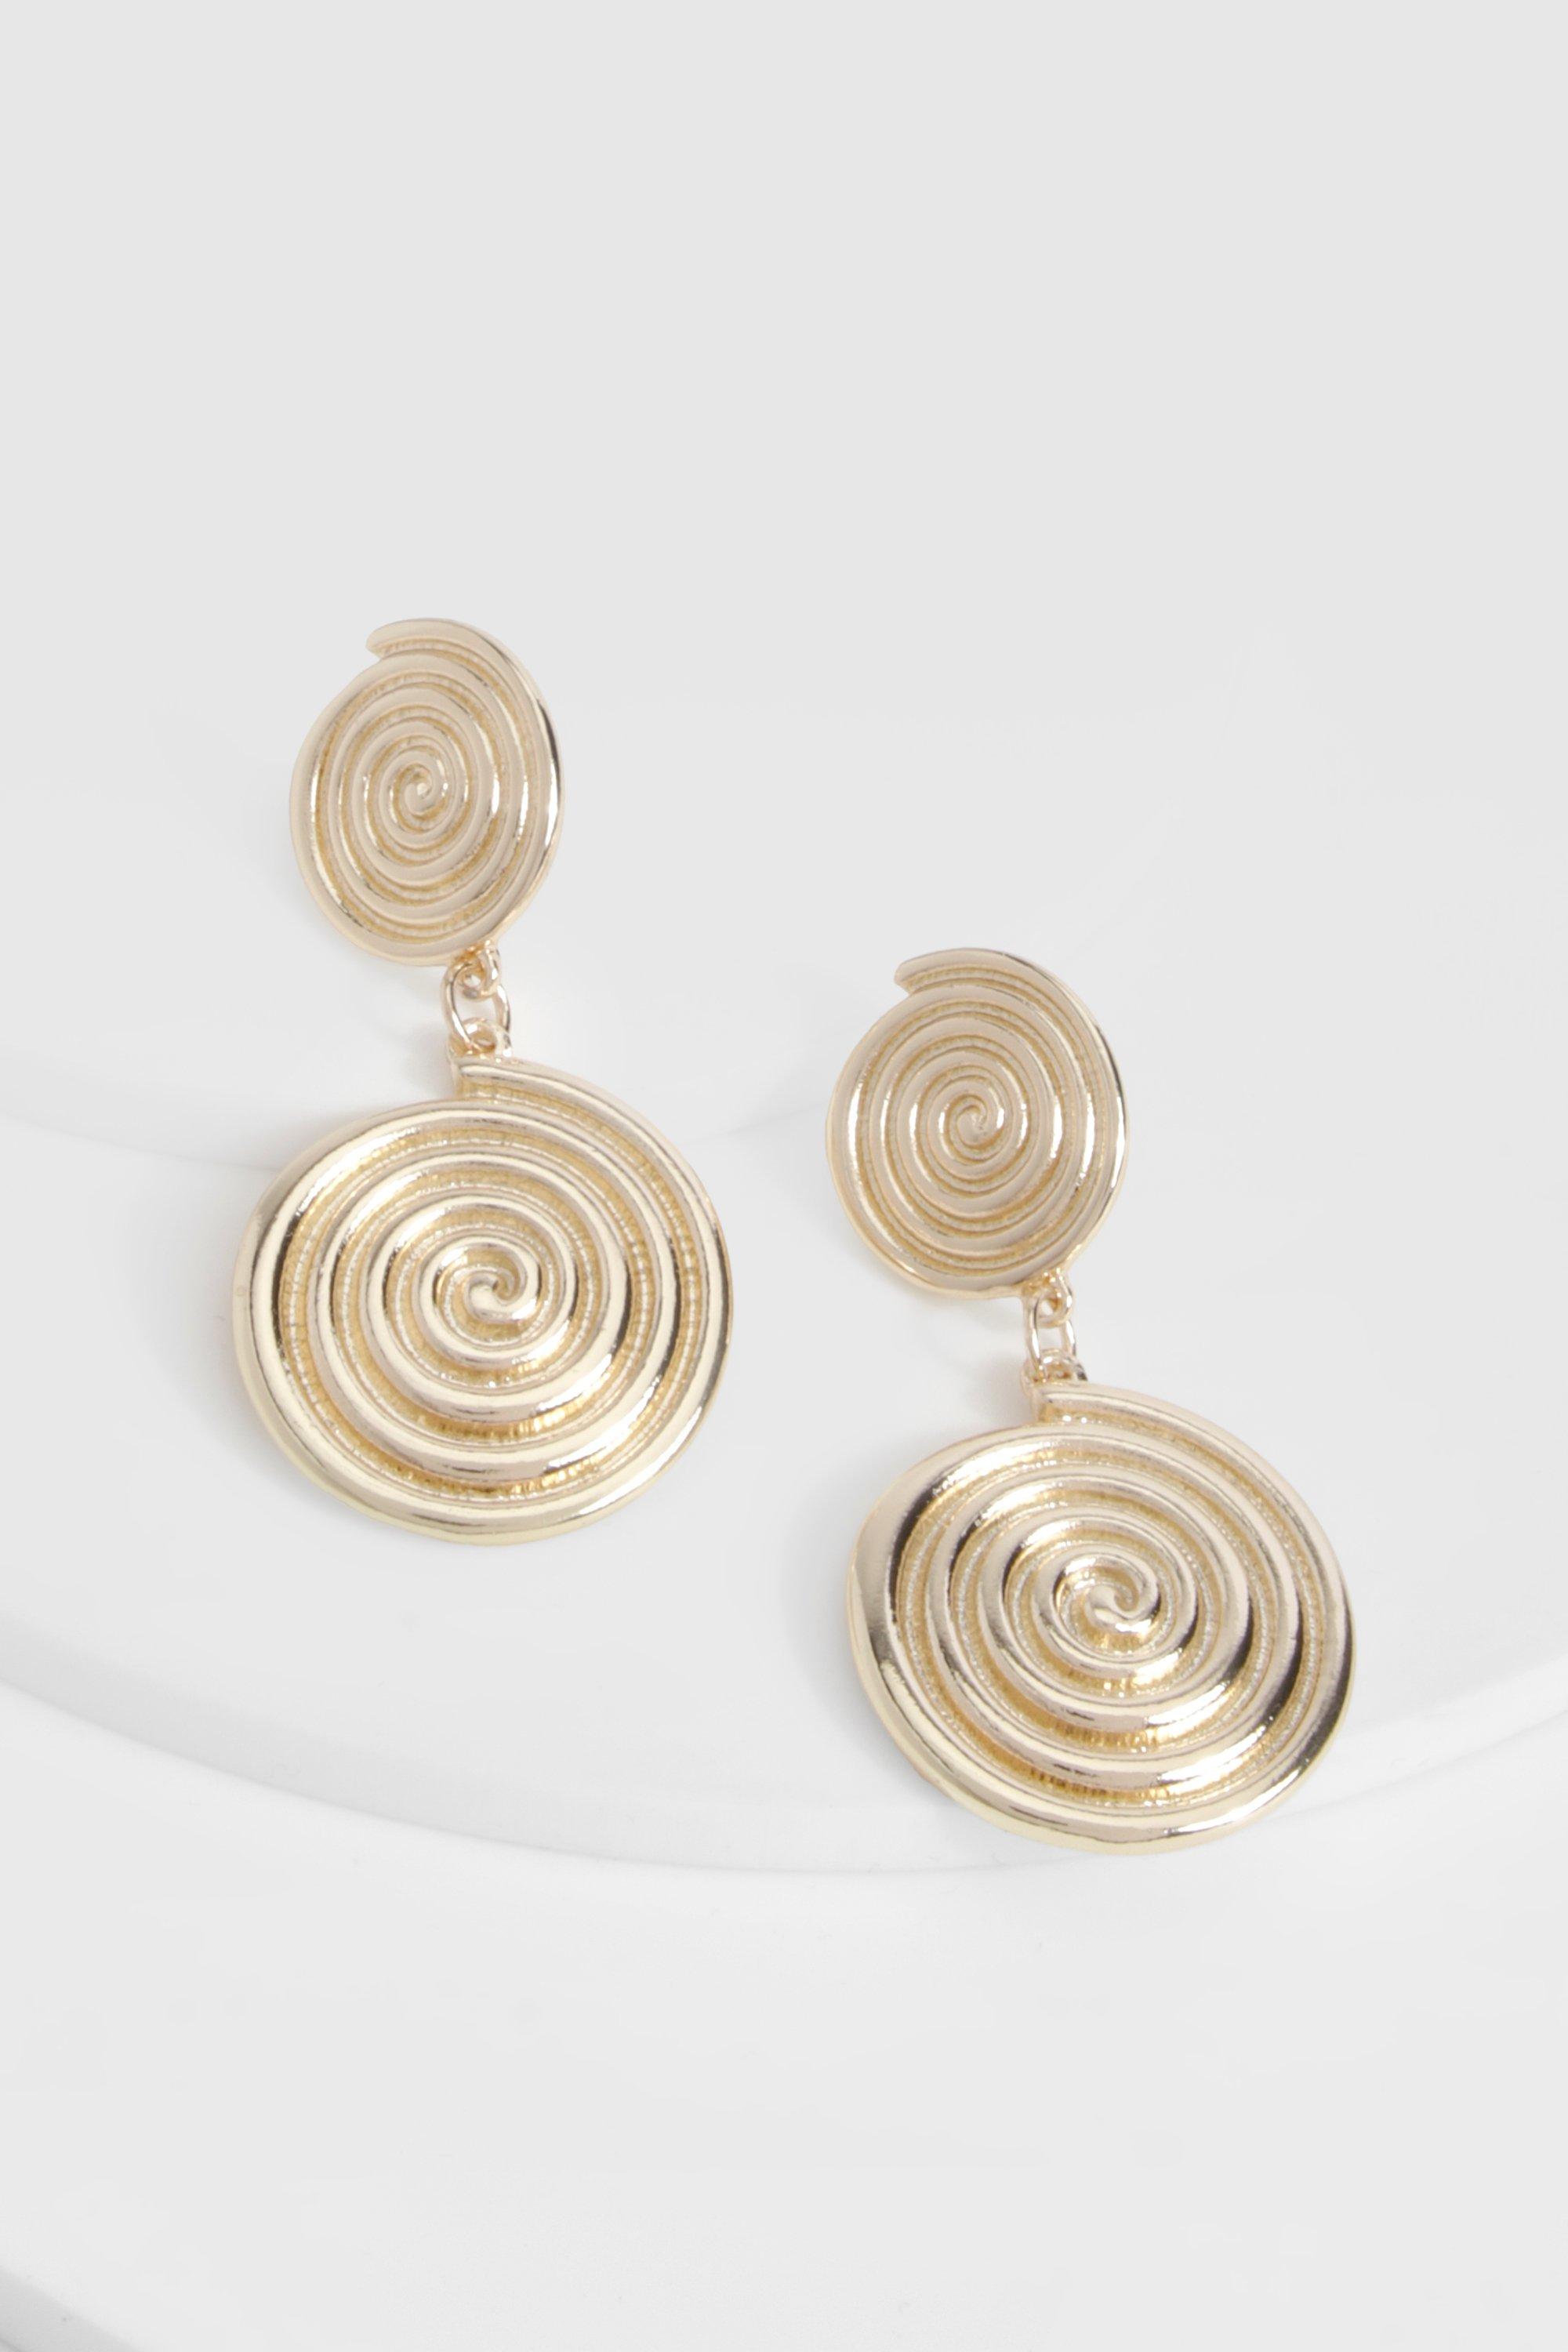 Image of Rustic Gold Spiral Drop Earrings, Metallics